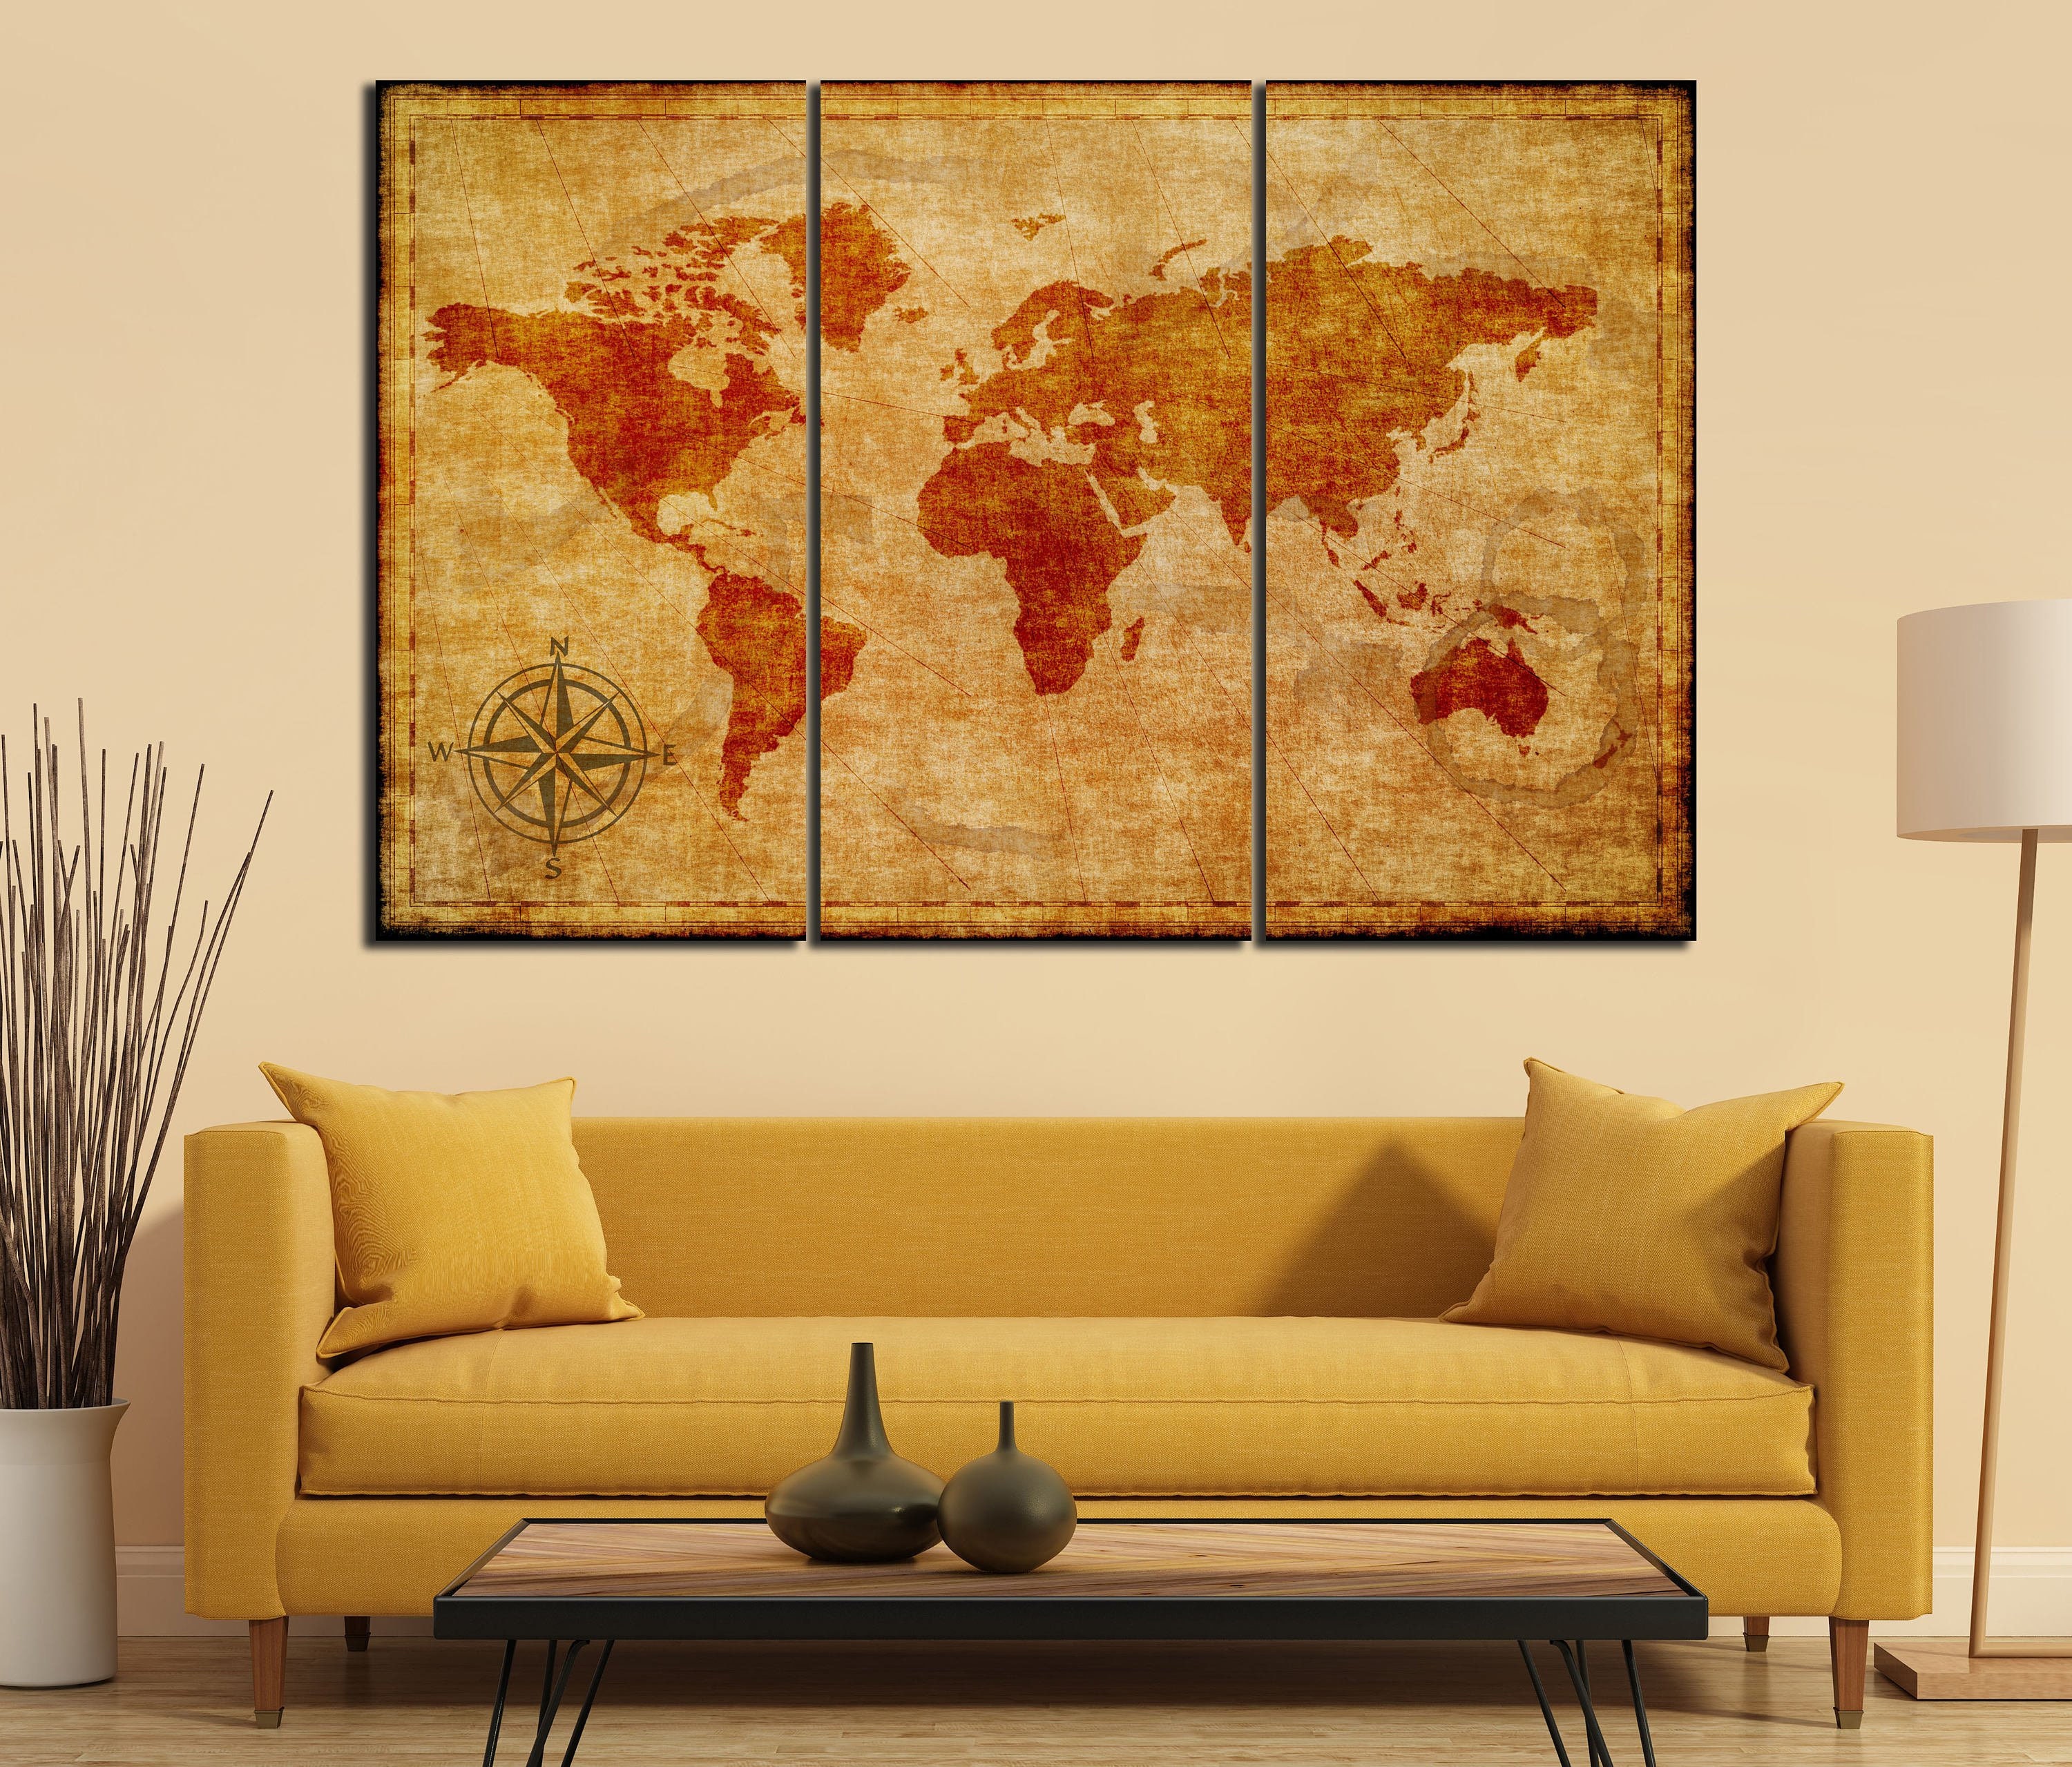 Deco POSTER.Home room Art.Interior Design.Mapa Mundi.Vintage World Map.7021